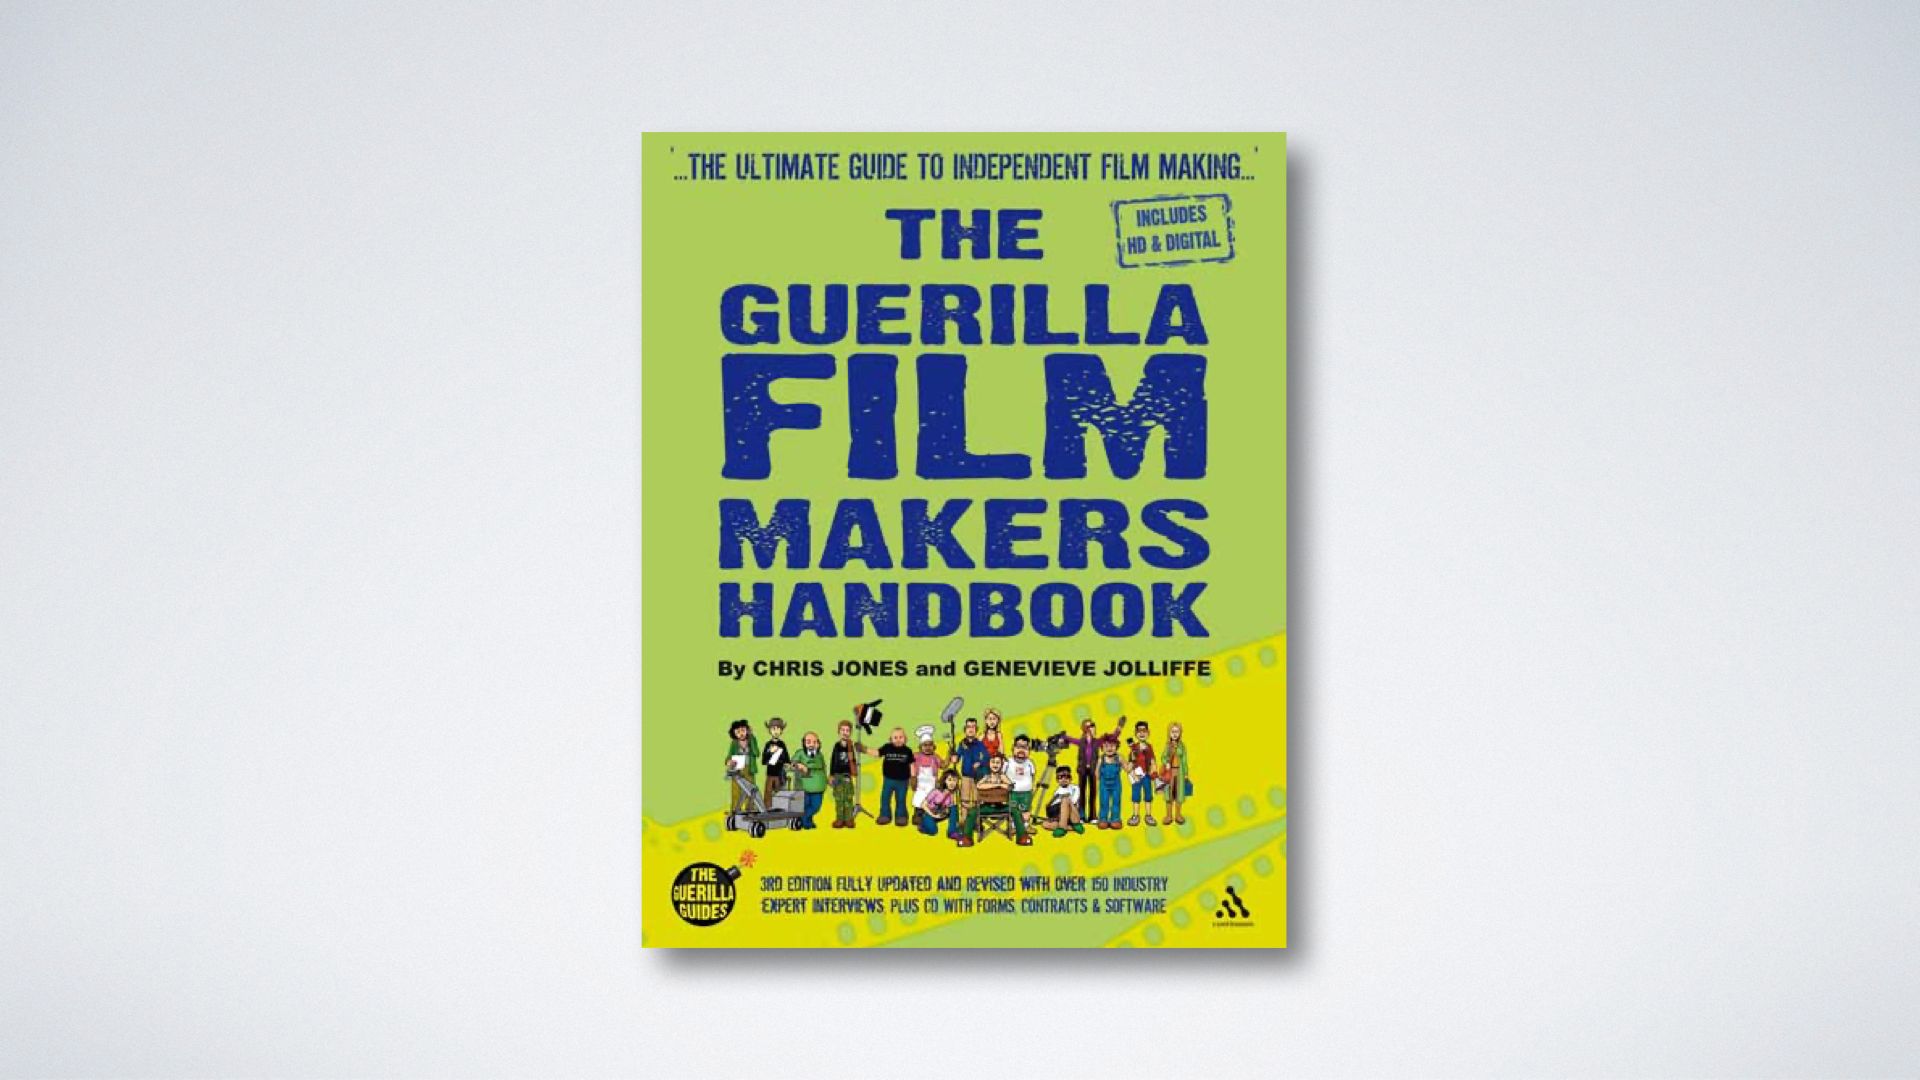 The Guerrilla Filmmakers Handbook